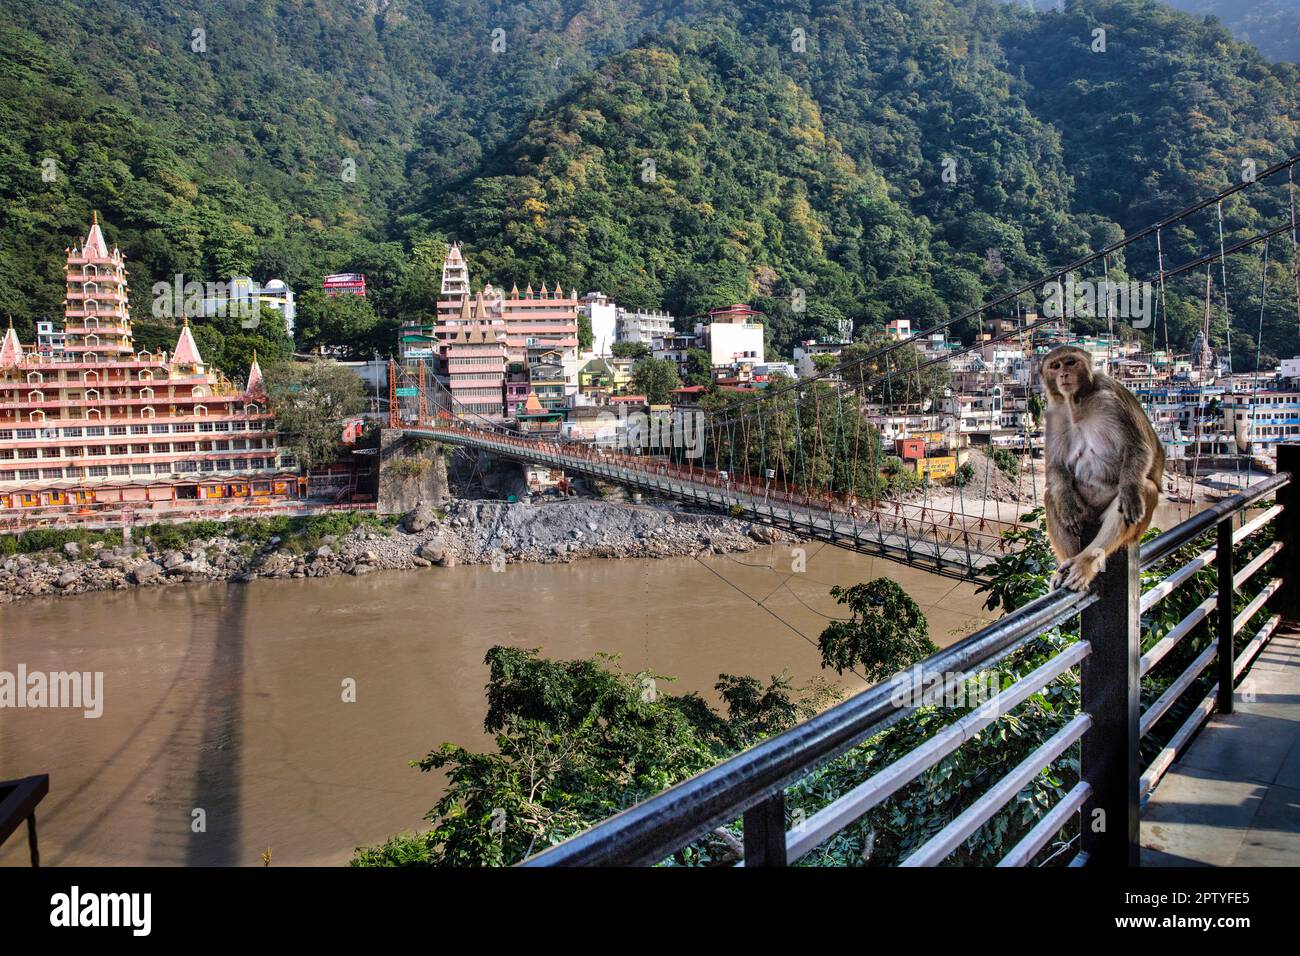 Inde, Uttarakhand, Rishikesh, Ganga, fleuve Ganges, Temple de Nilkantha Mahadev. Singe rhésus macaques. Pont Lakshman Jhula. Banque D'Images